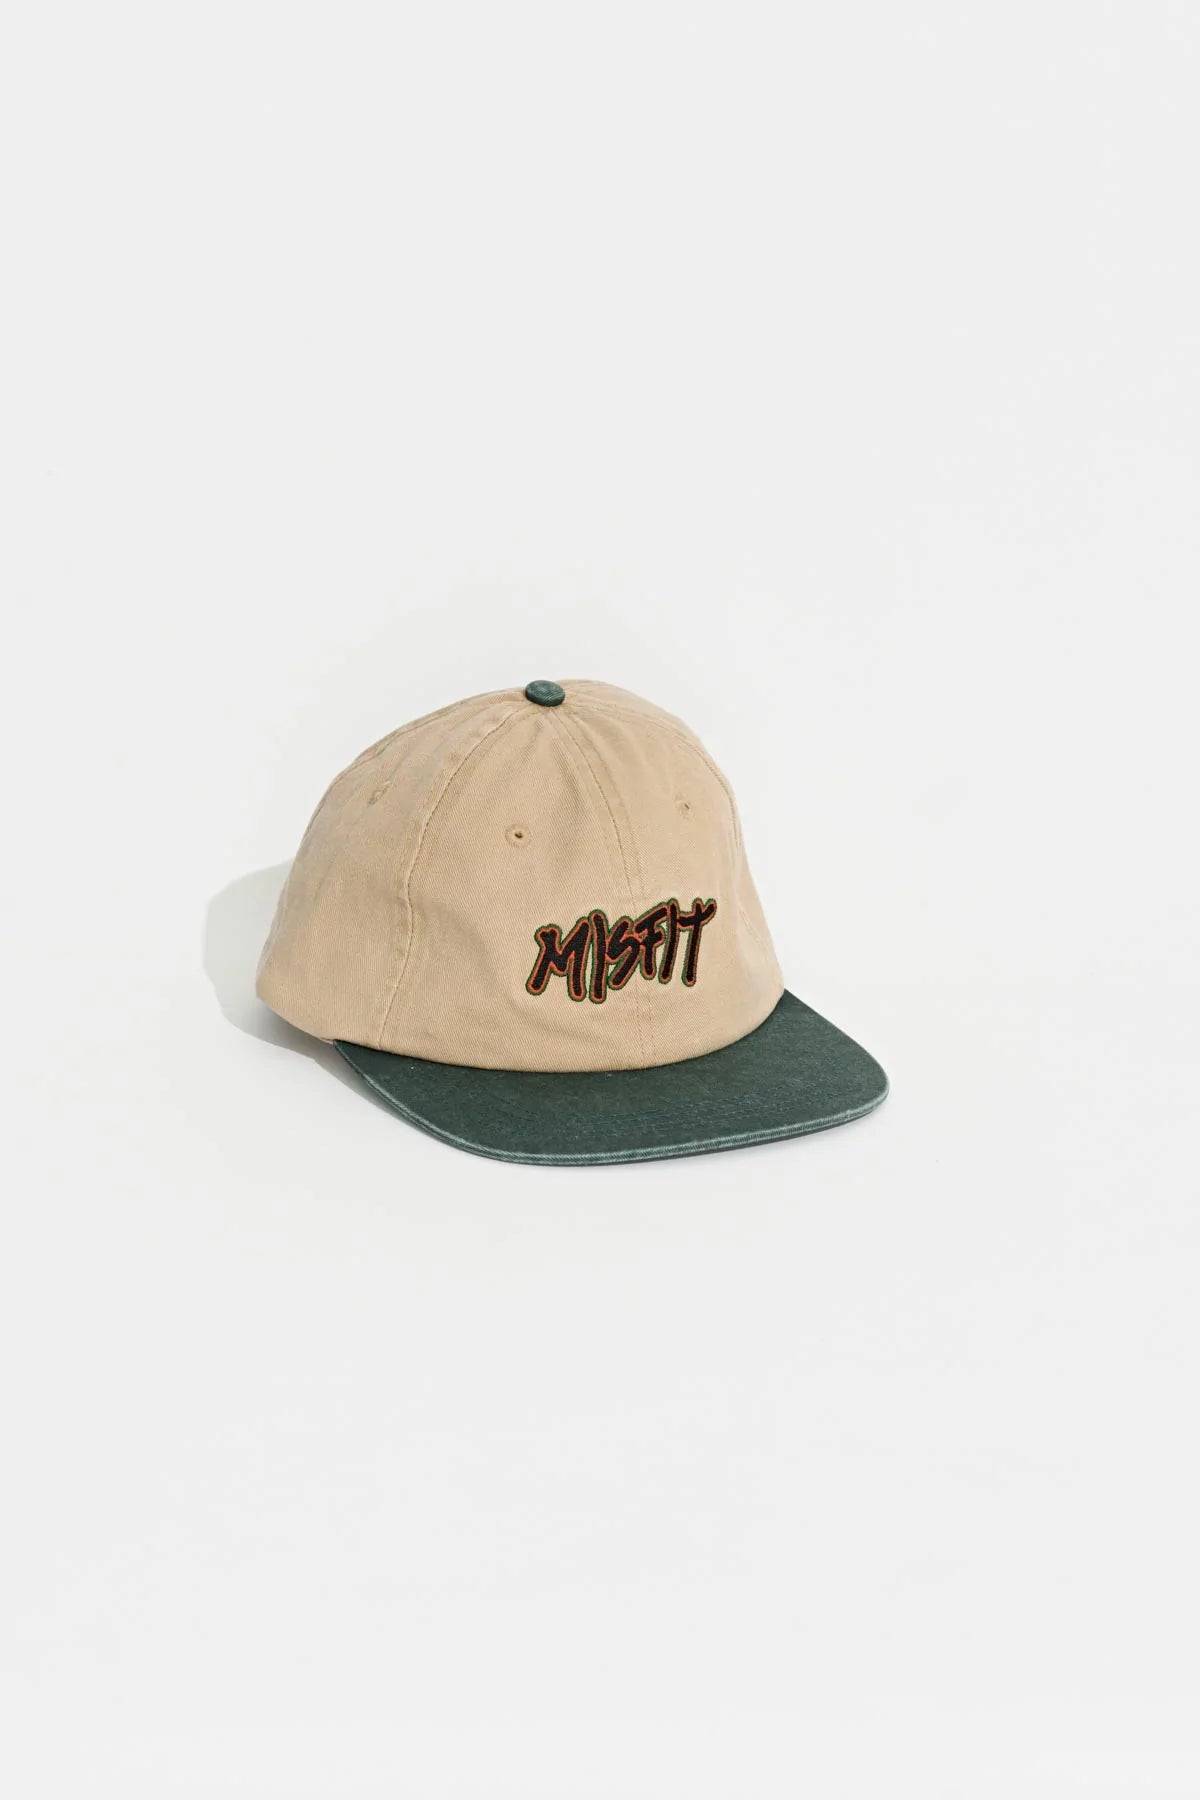 MISFIT Gattico Snapback Hat